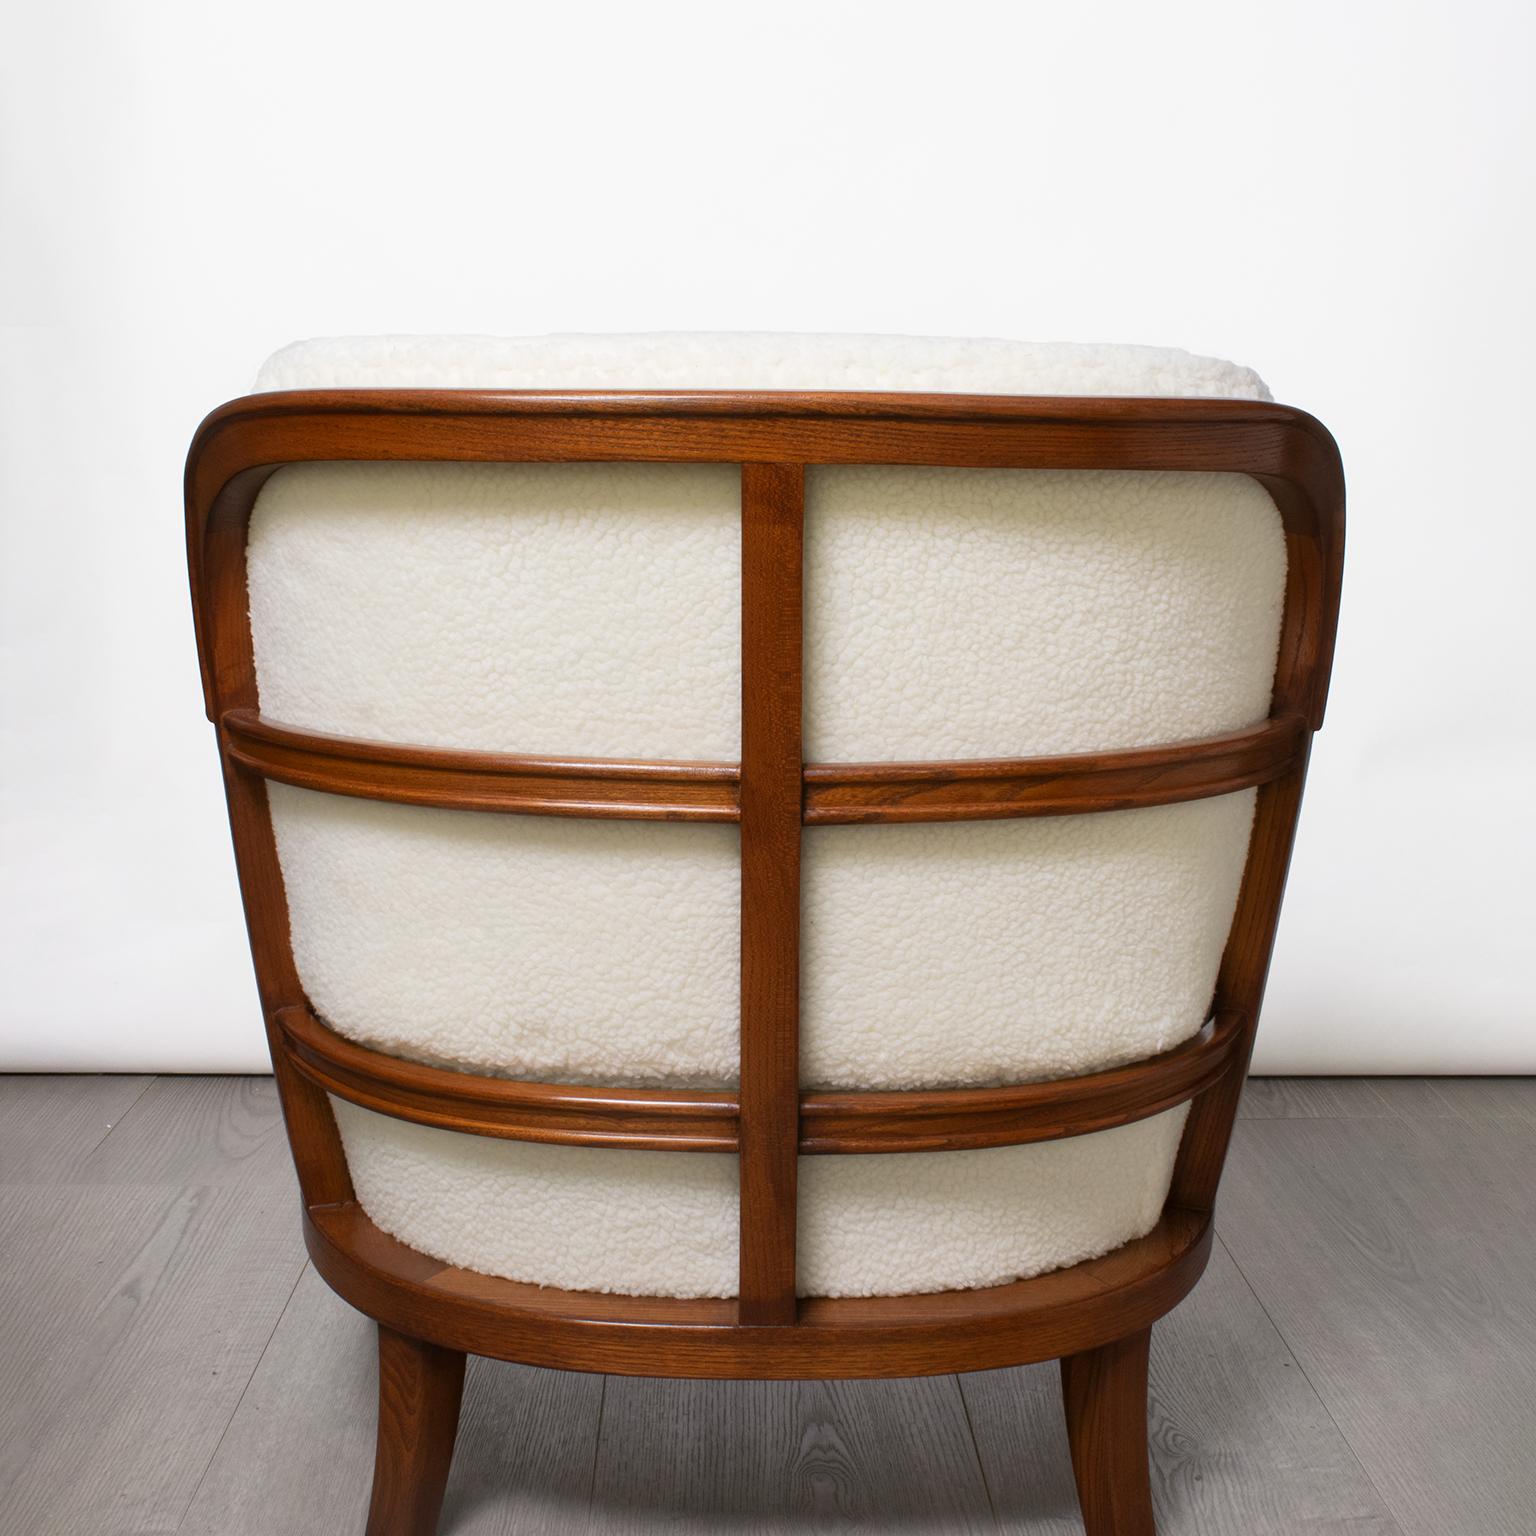 Pair of Scandinavian Modern Lounge Chairs by Carl-Johan Boman, Boman OY, Finland 1